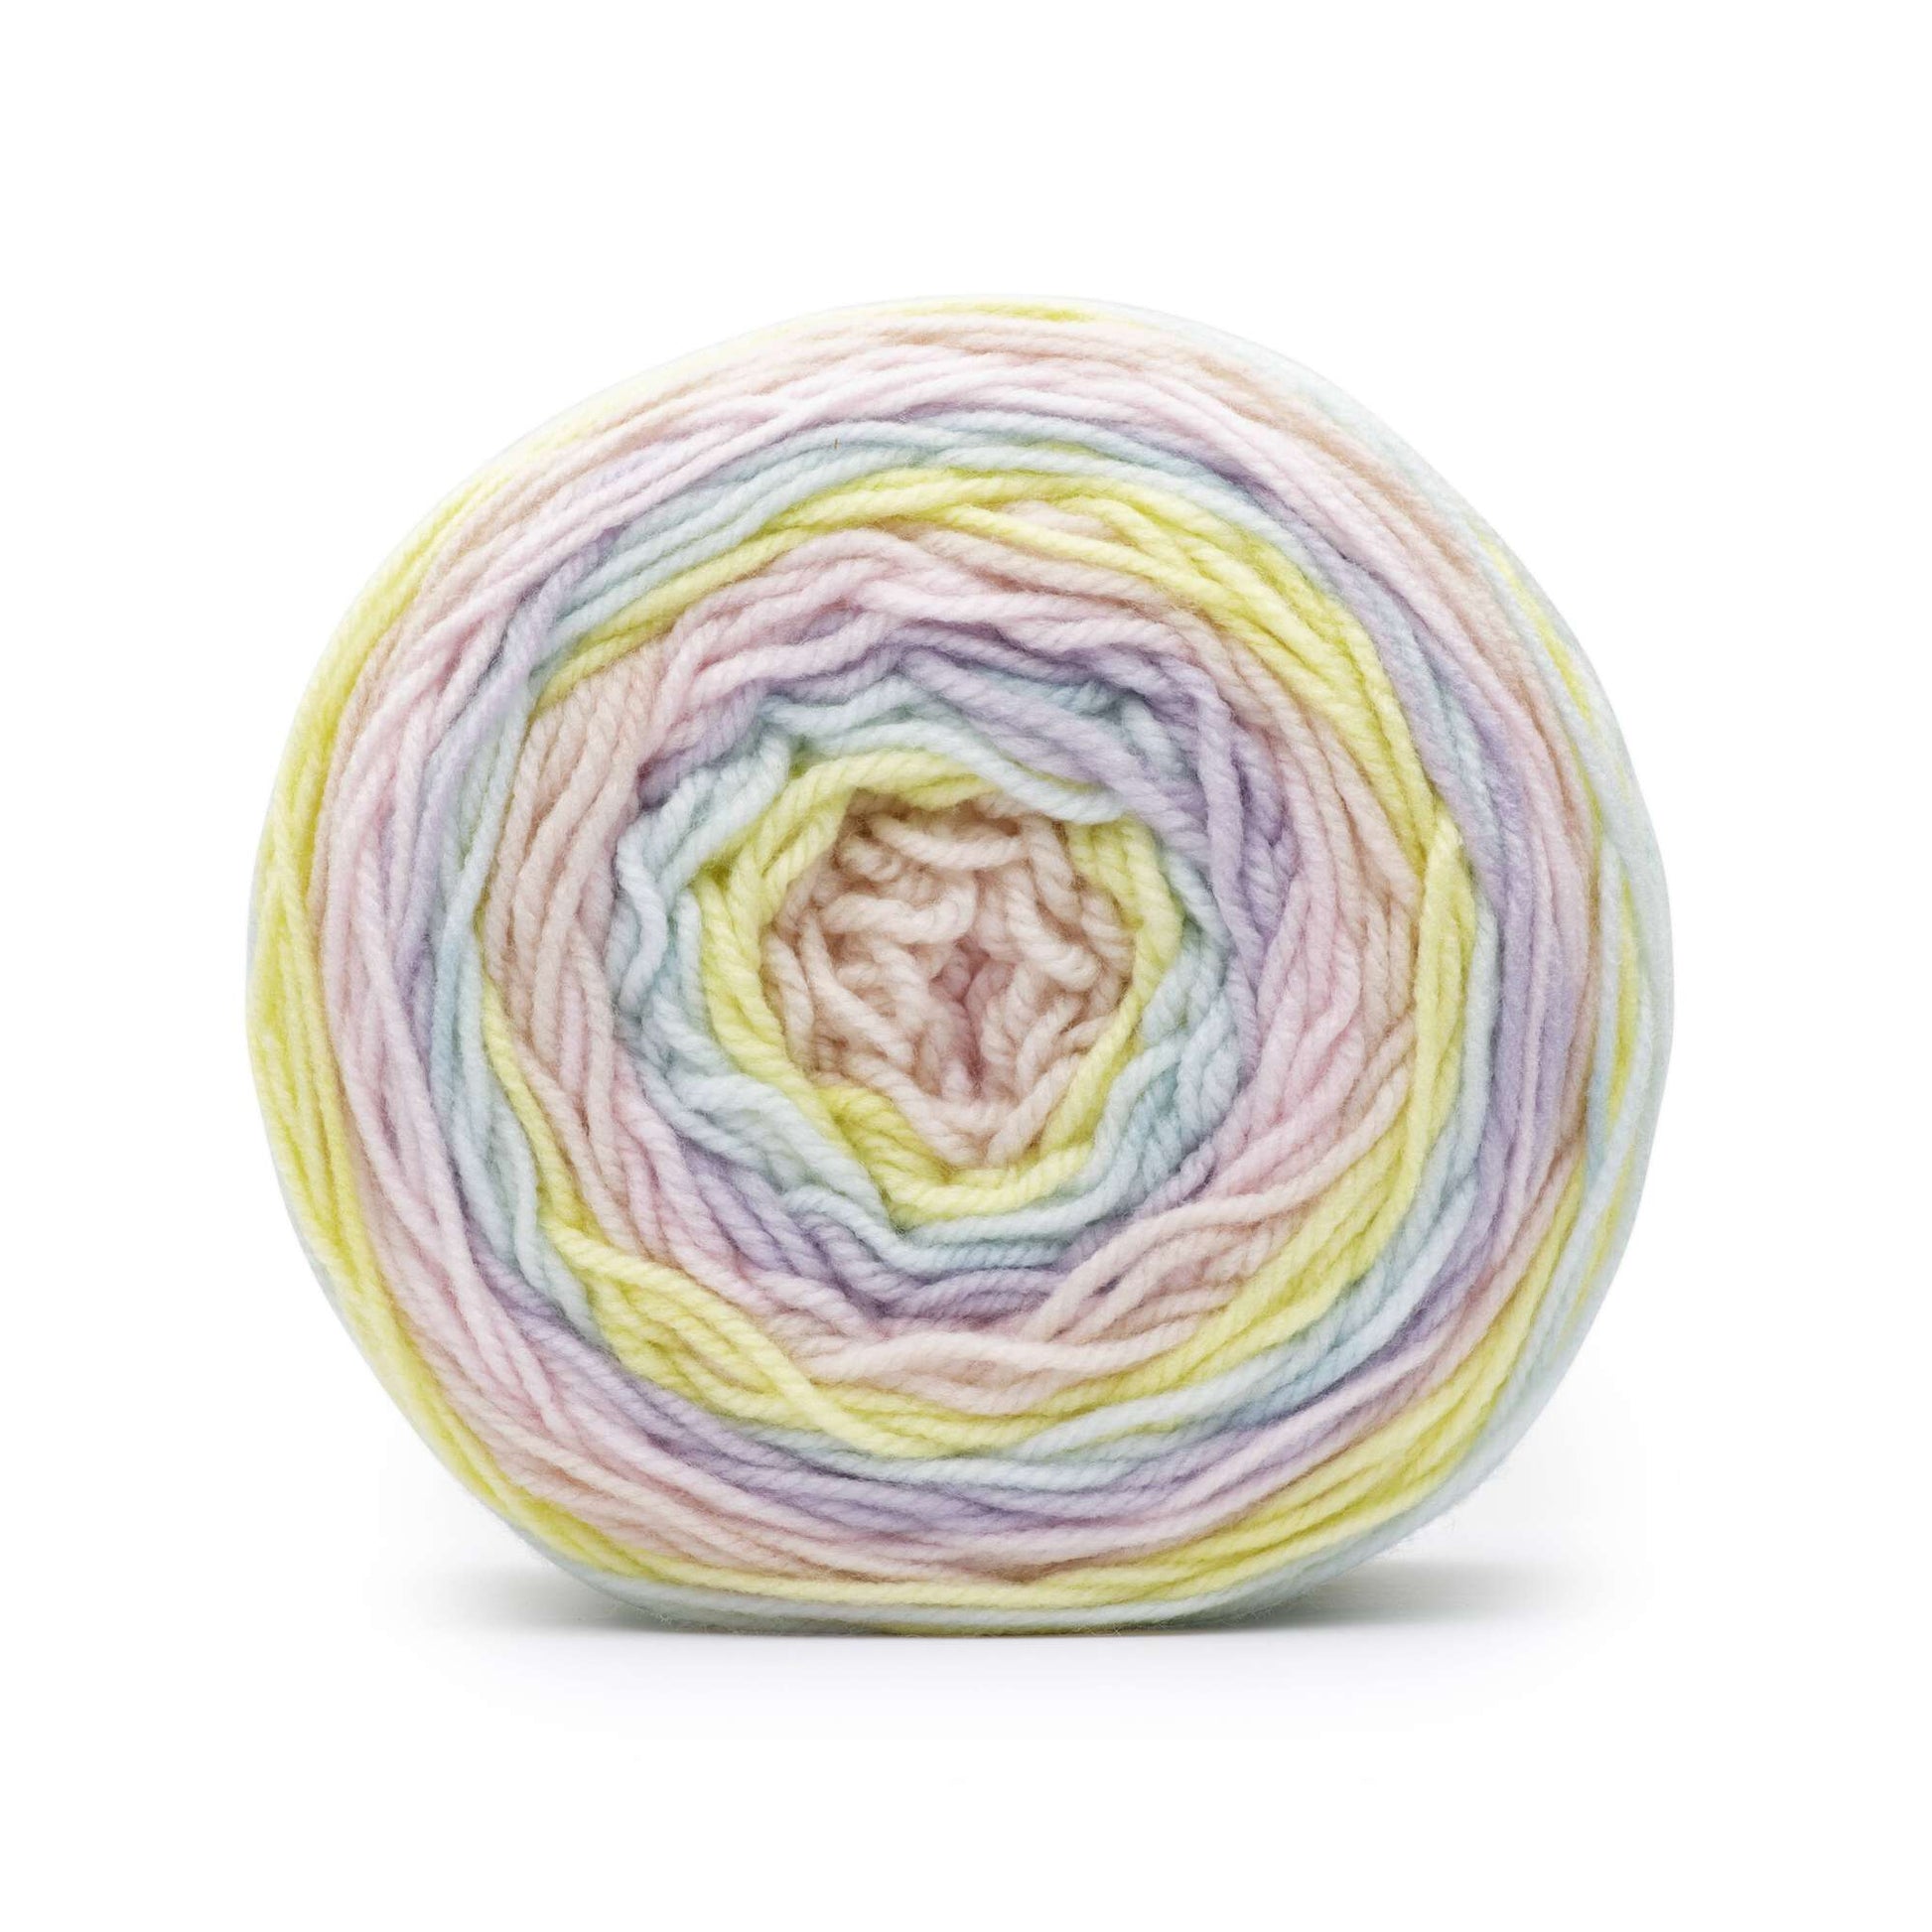 Caron Baby Cakes Yarn (240g/8.5oz) - Retailer Exclusive